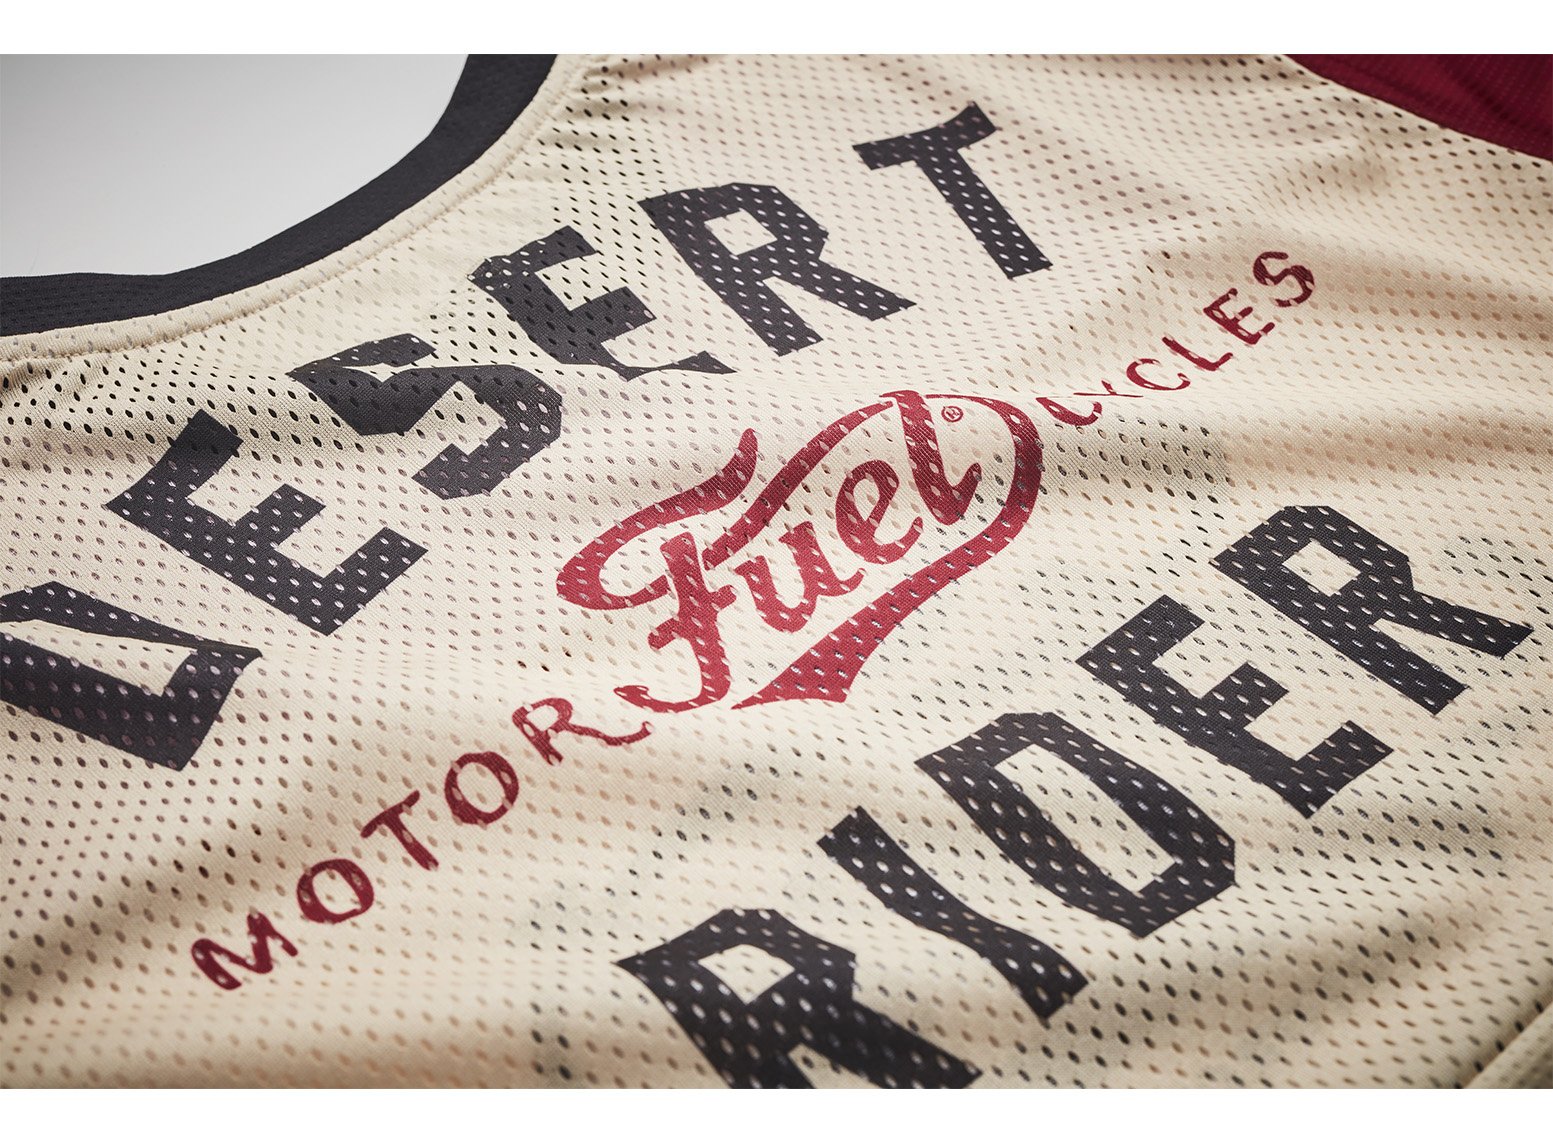 dune-jersey-detail-back-fuel-motorcycles_1800x1800.jpg